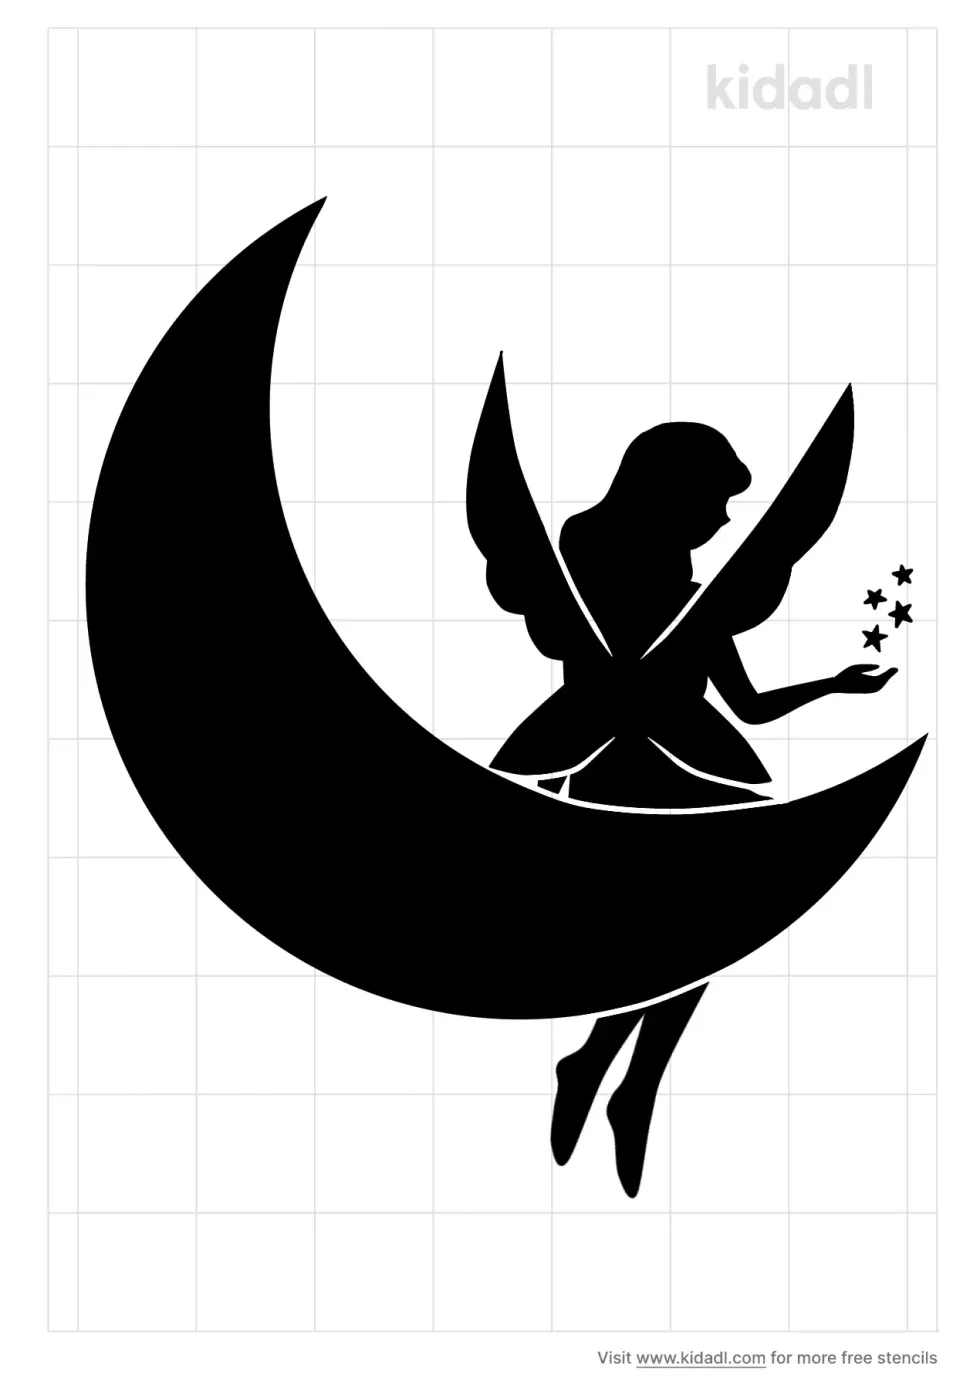 Fairy Moon